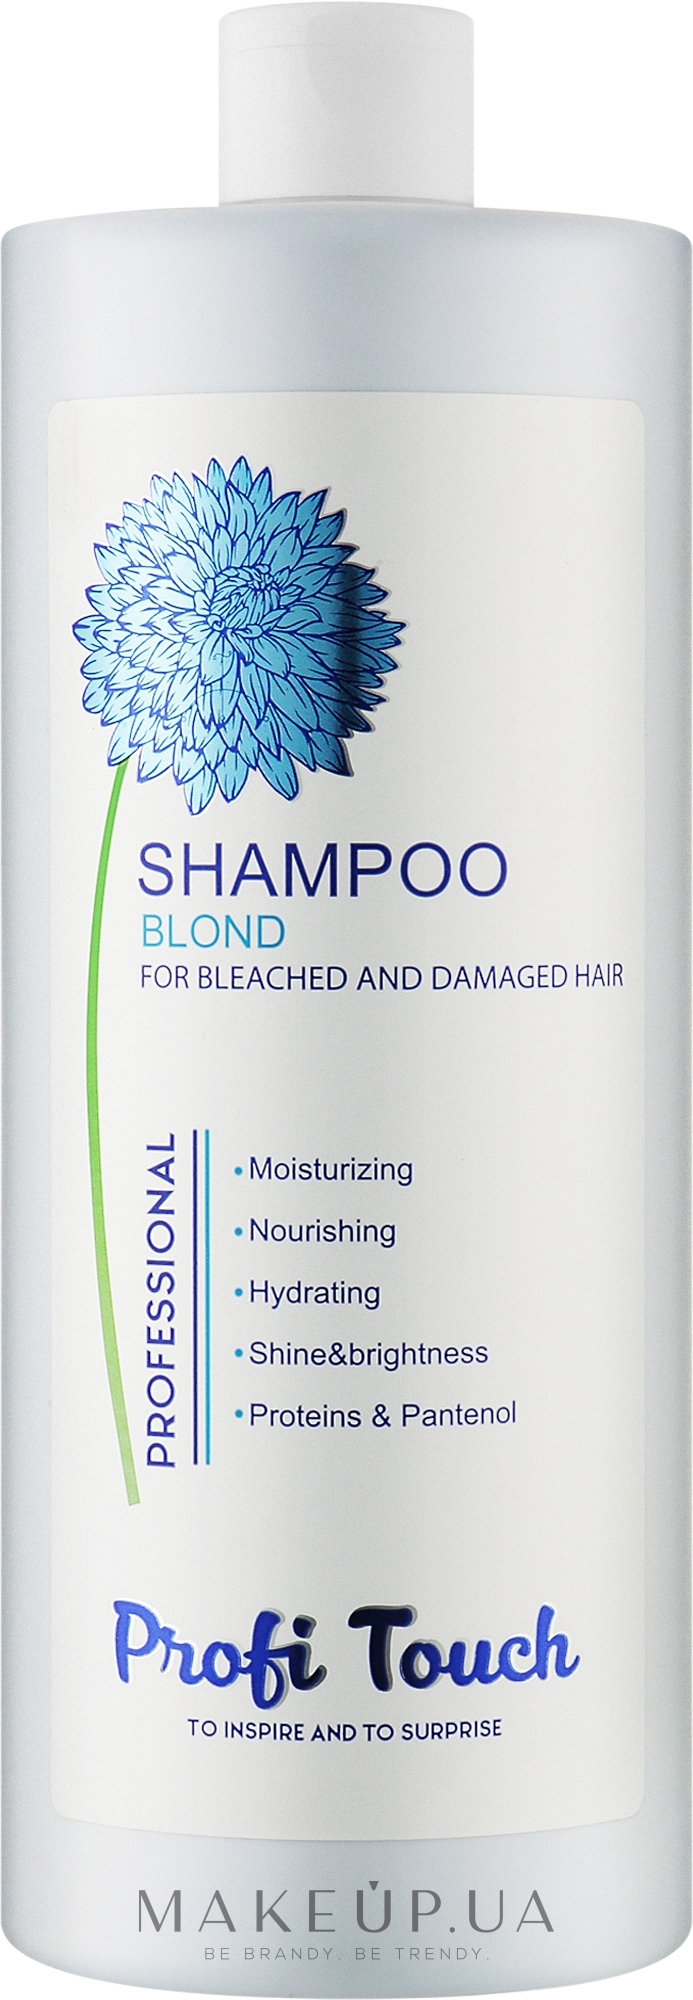 Шампунь для волос "Blond" - Profi Touch Shampoo  — фото 1000ml